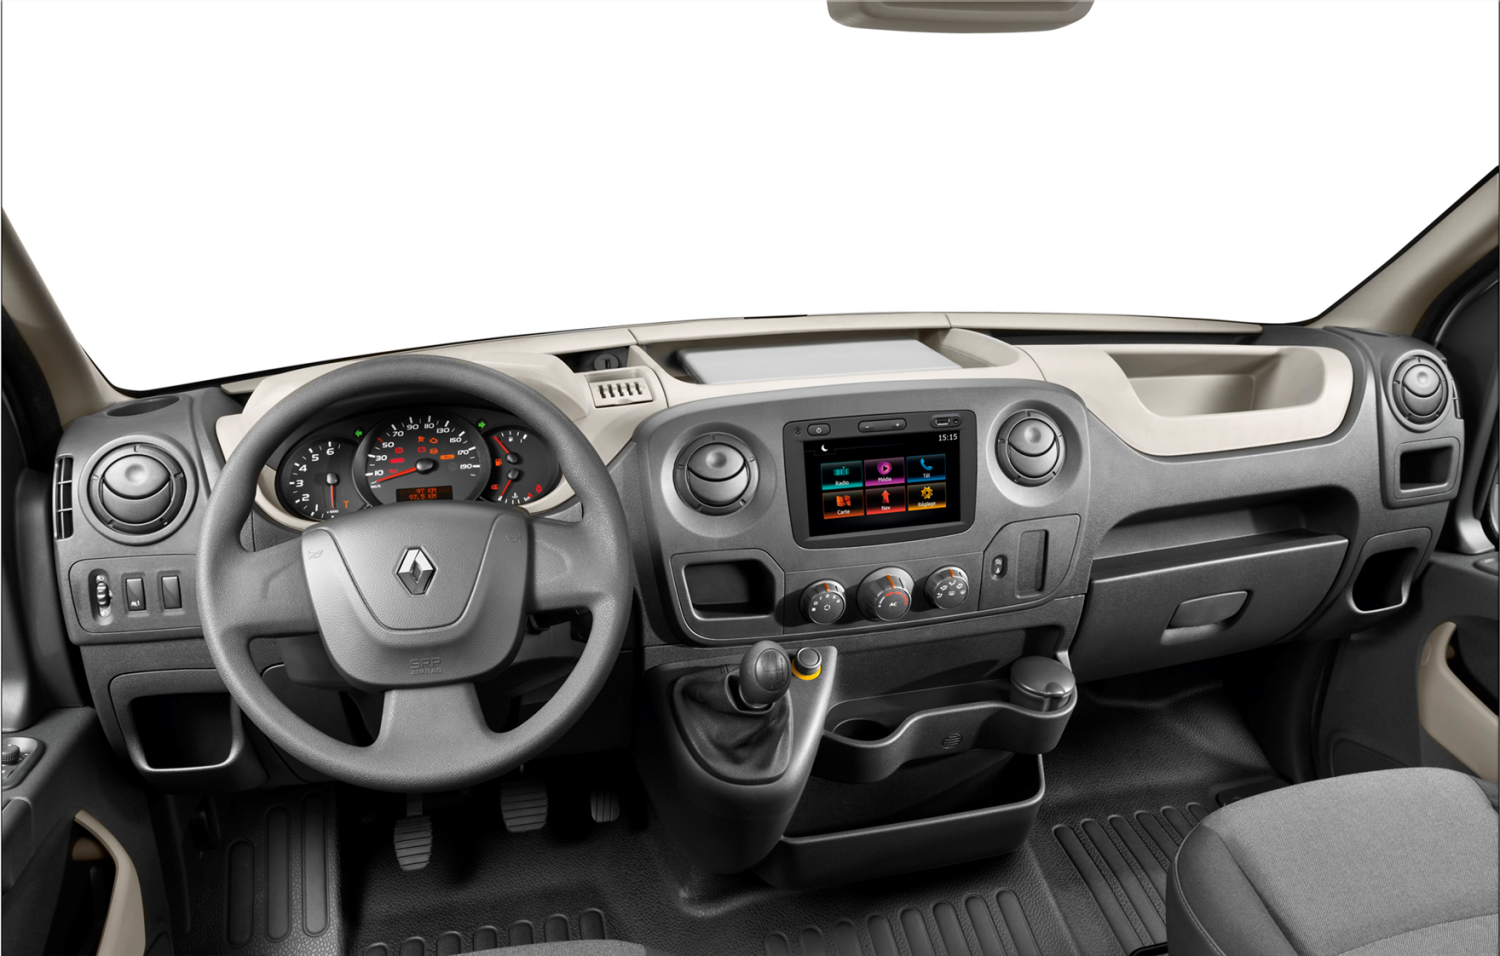 Renault Master interior - Cockpit